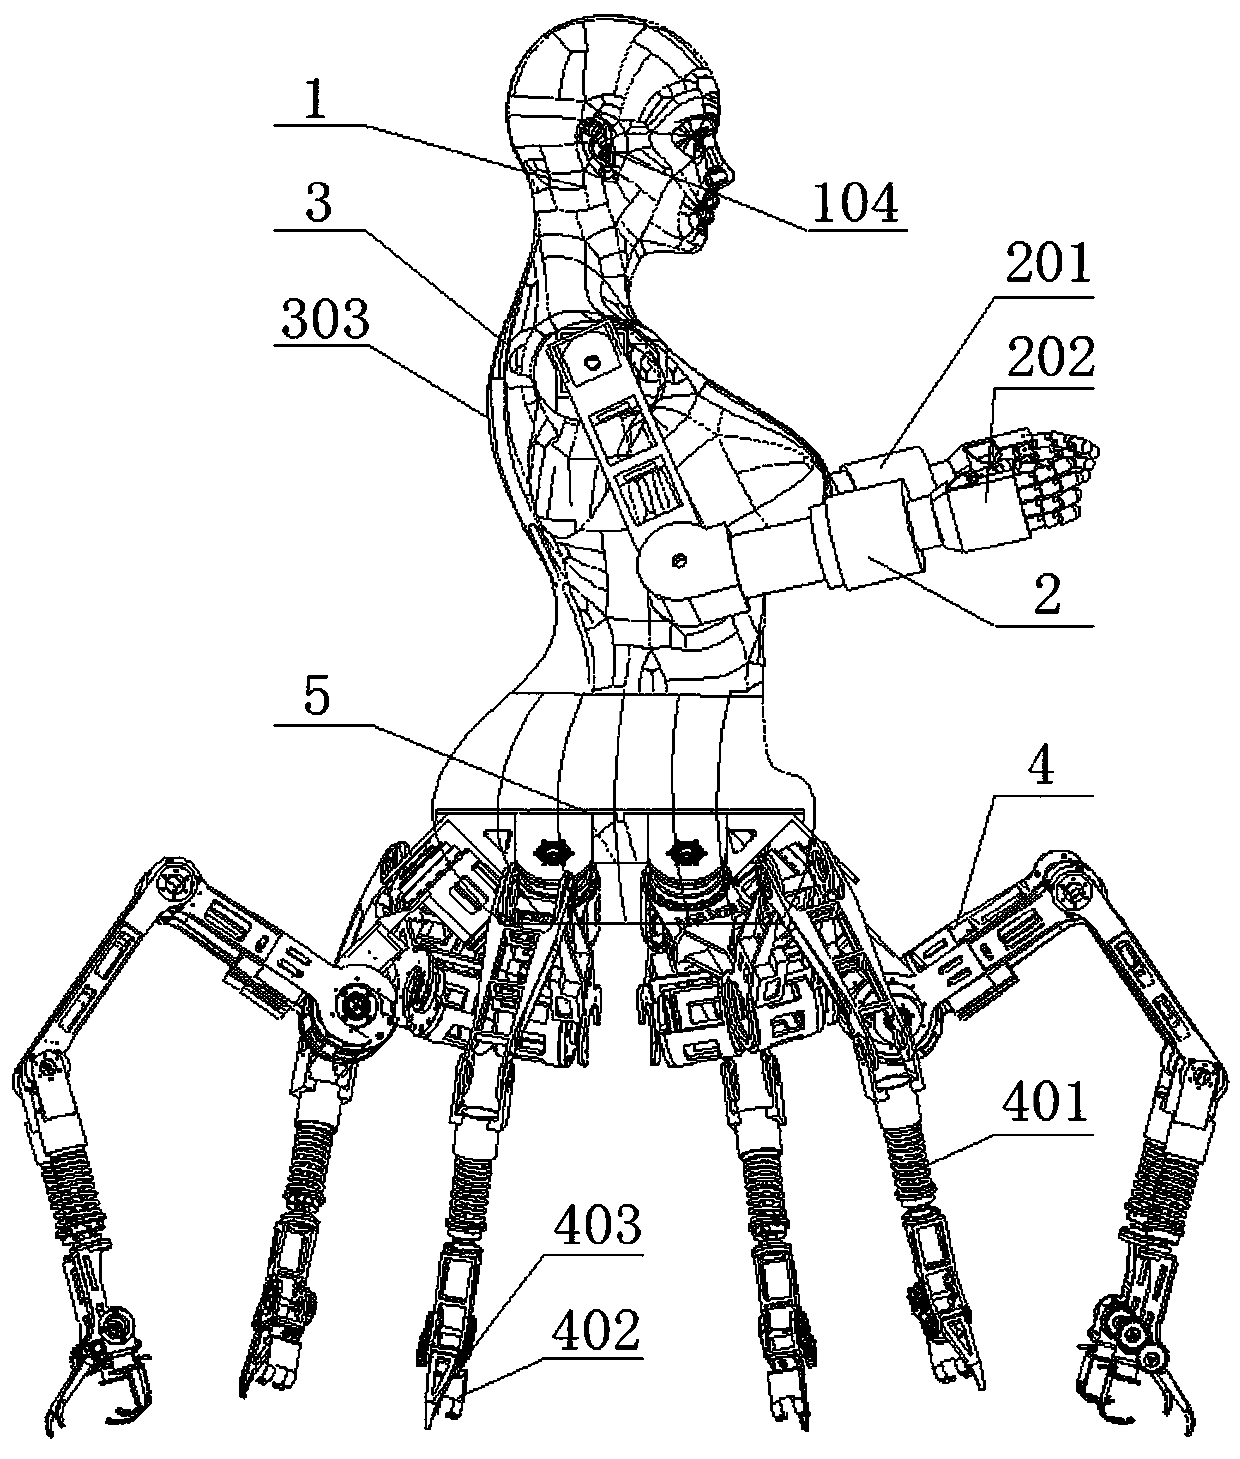 Multifunctional humanoid multi-legged robot